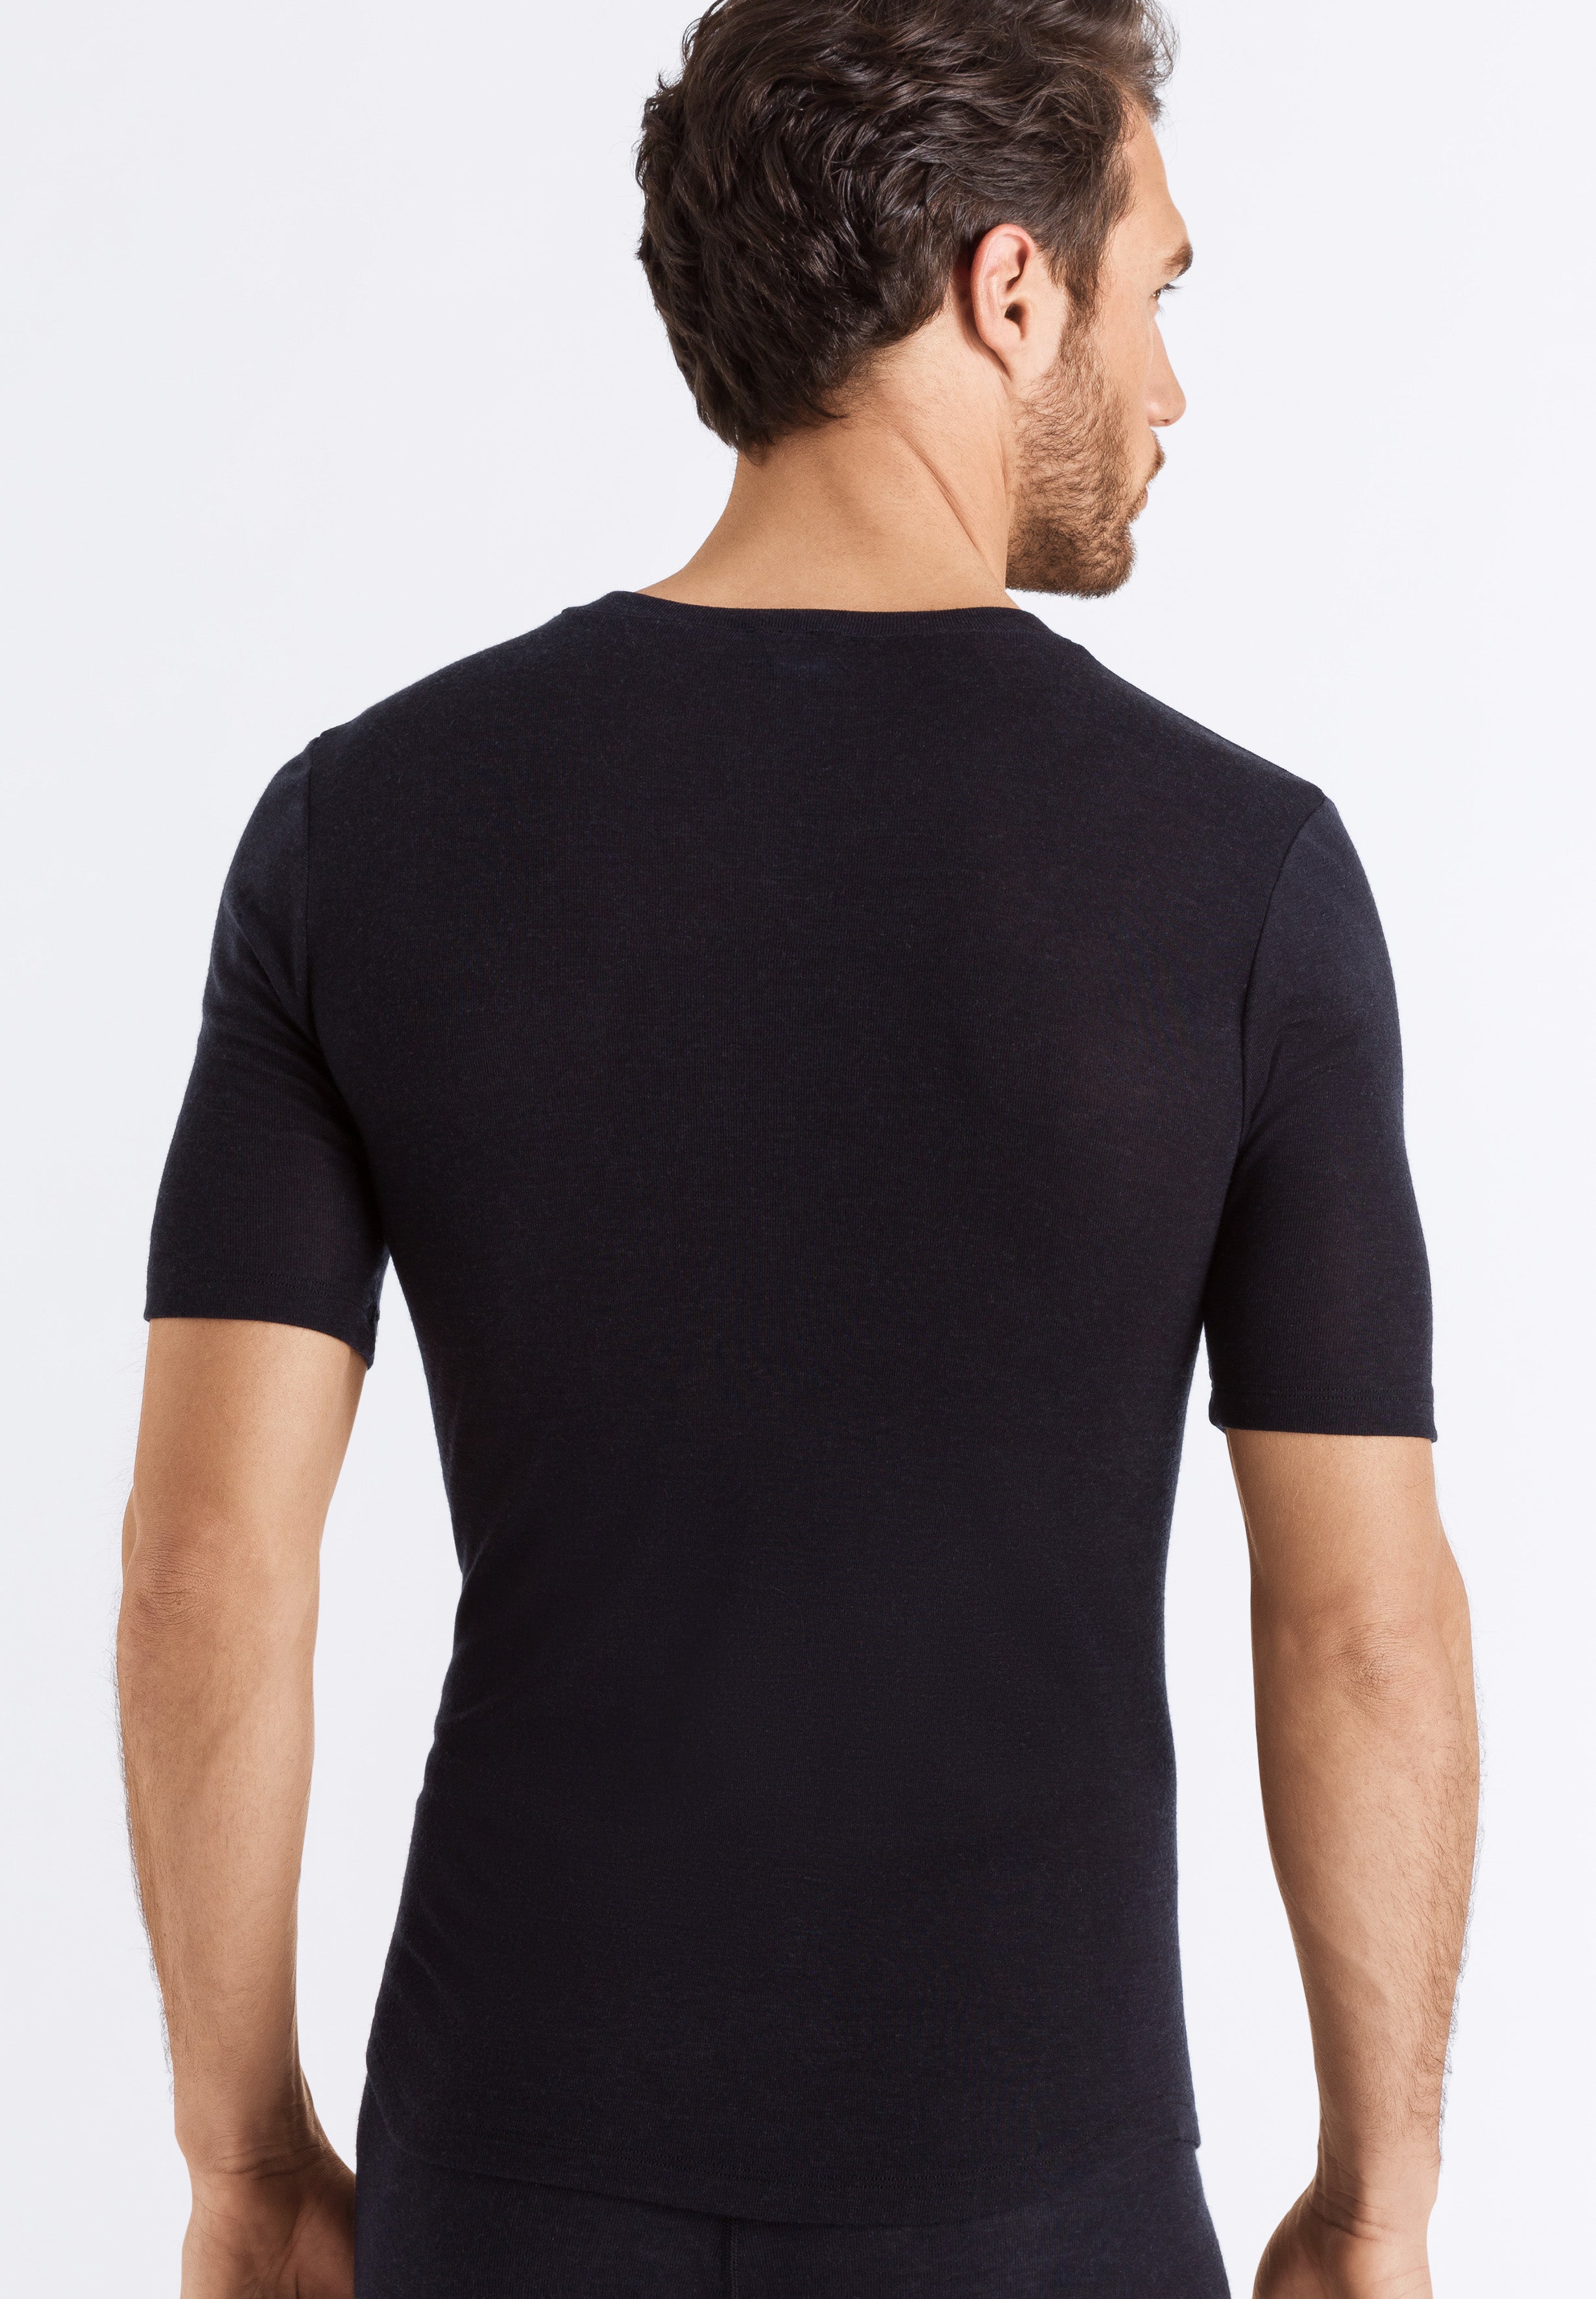 73152 Silk/Cashmere V-Neck S/Slv Shirt - 019 Black